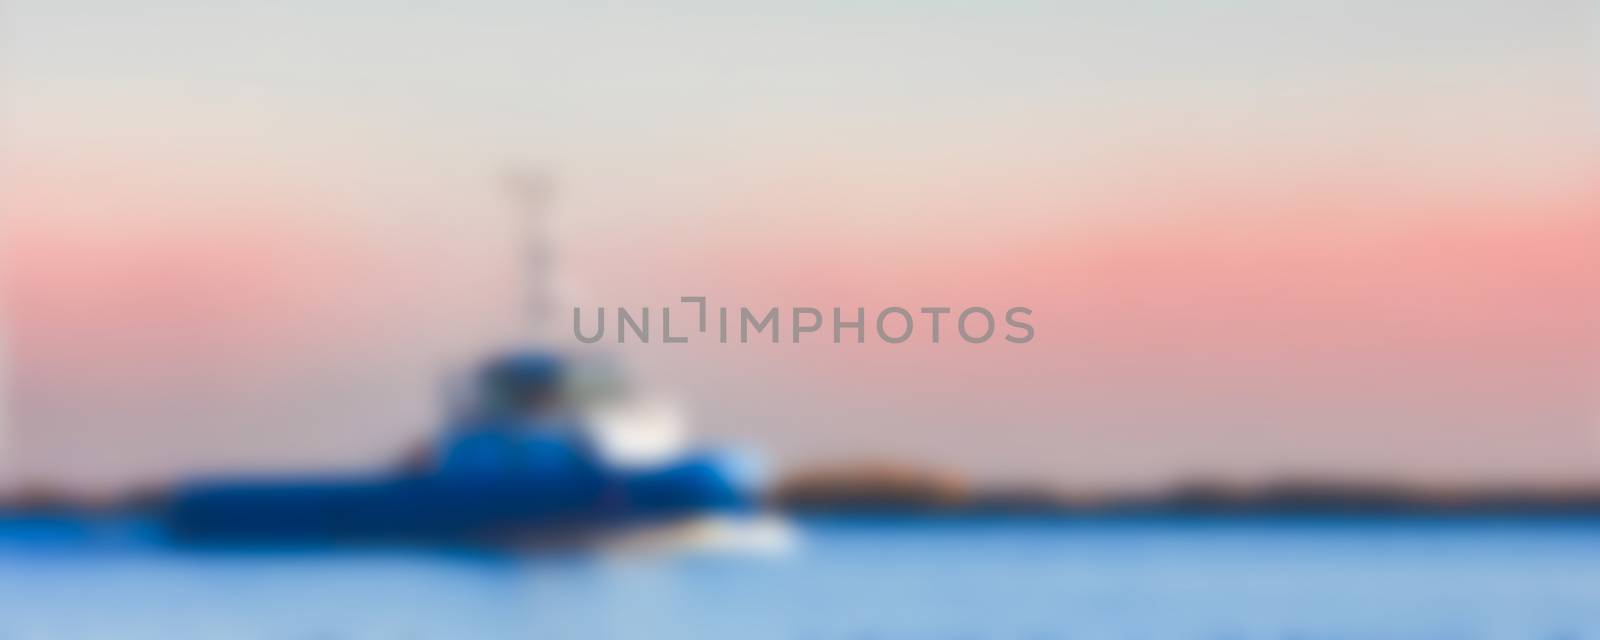 Tug ship - blurred image by sengnsp